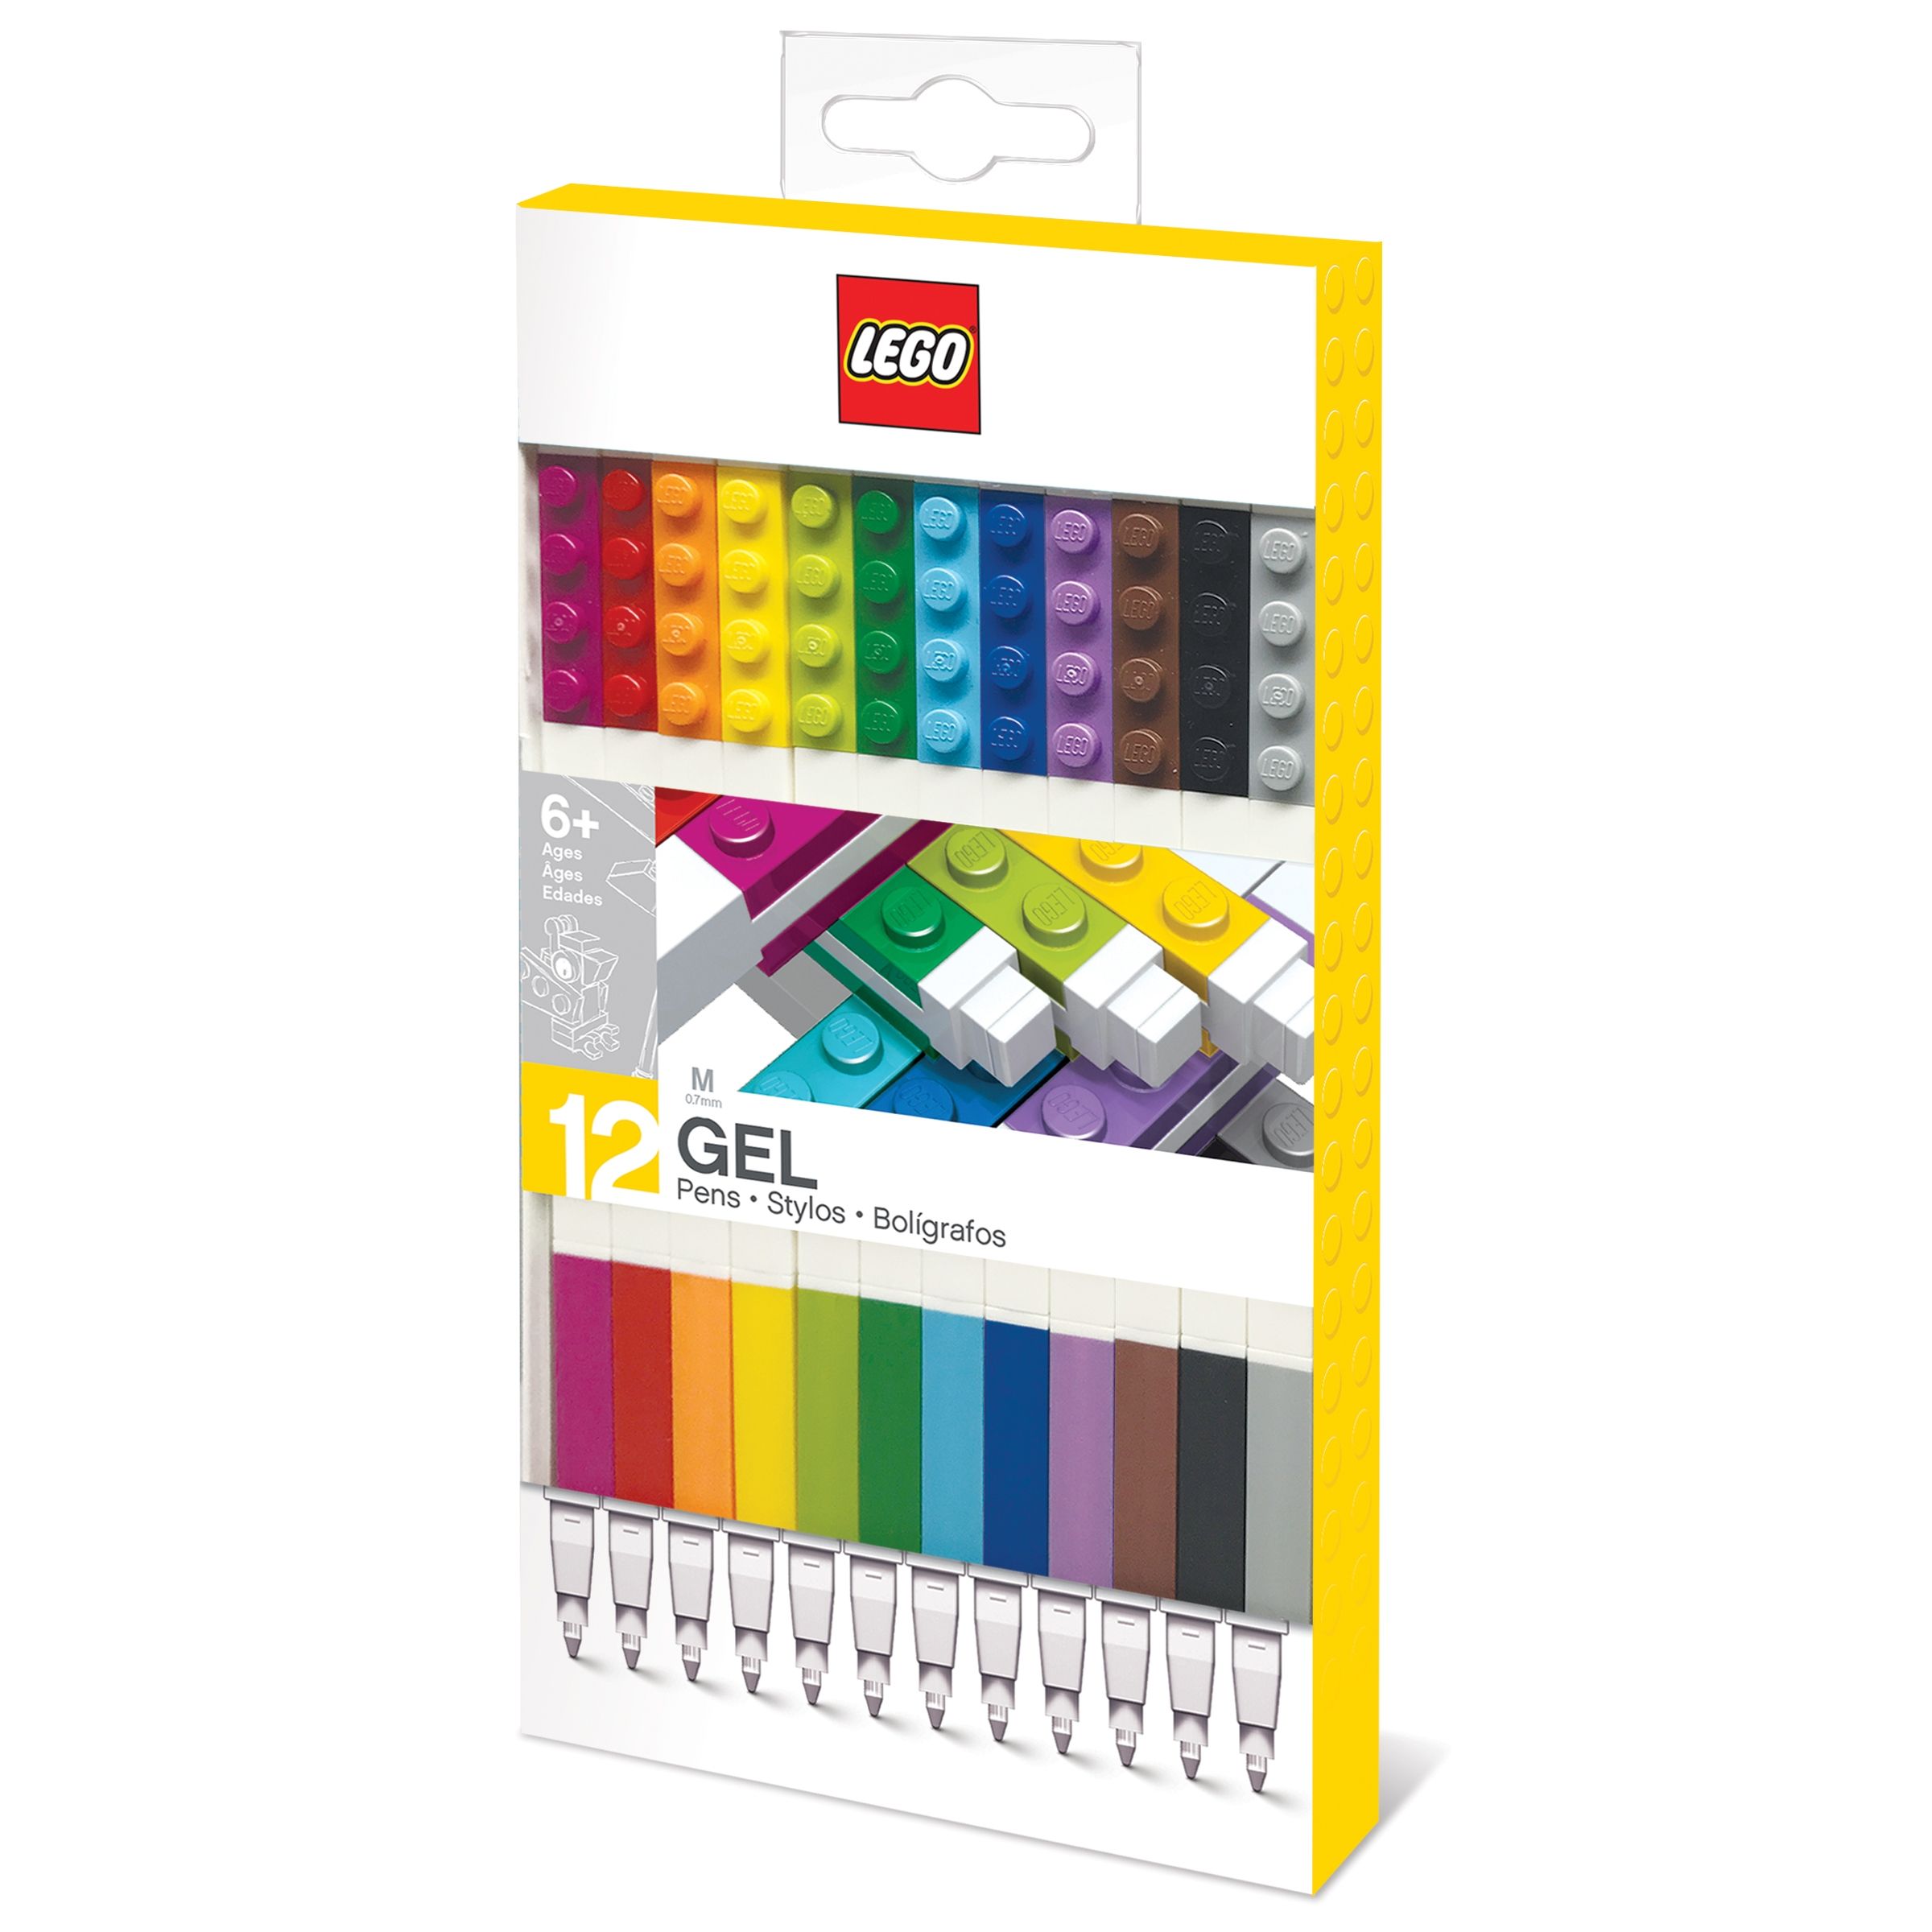 LEGO Gear 5005964 12-teiliges Gelschreiber-Set LEGO_5005964_alt1.jpg